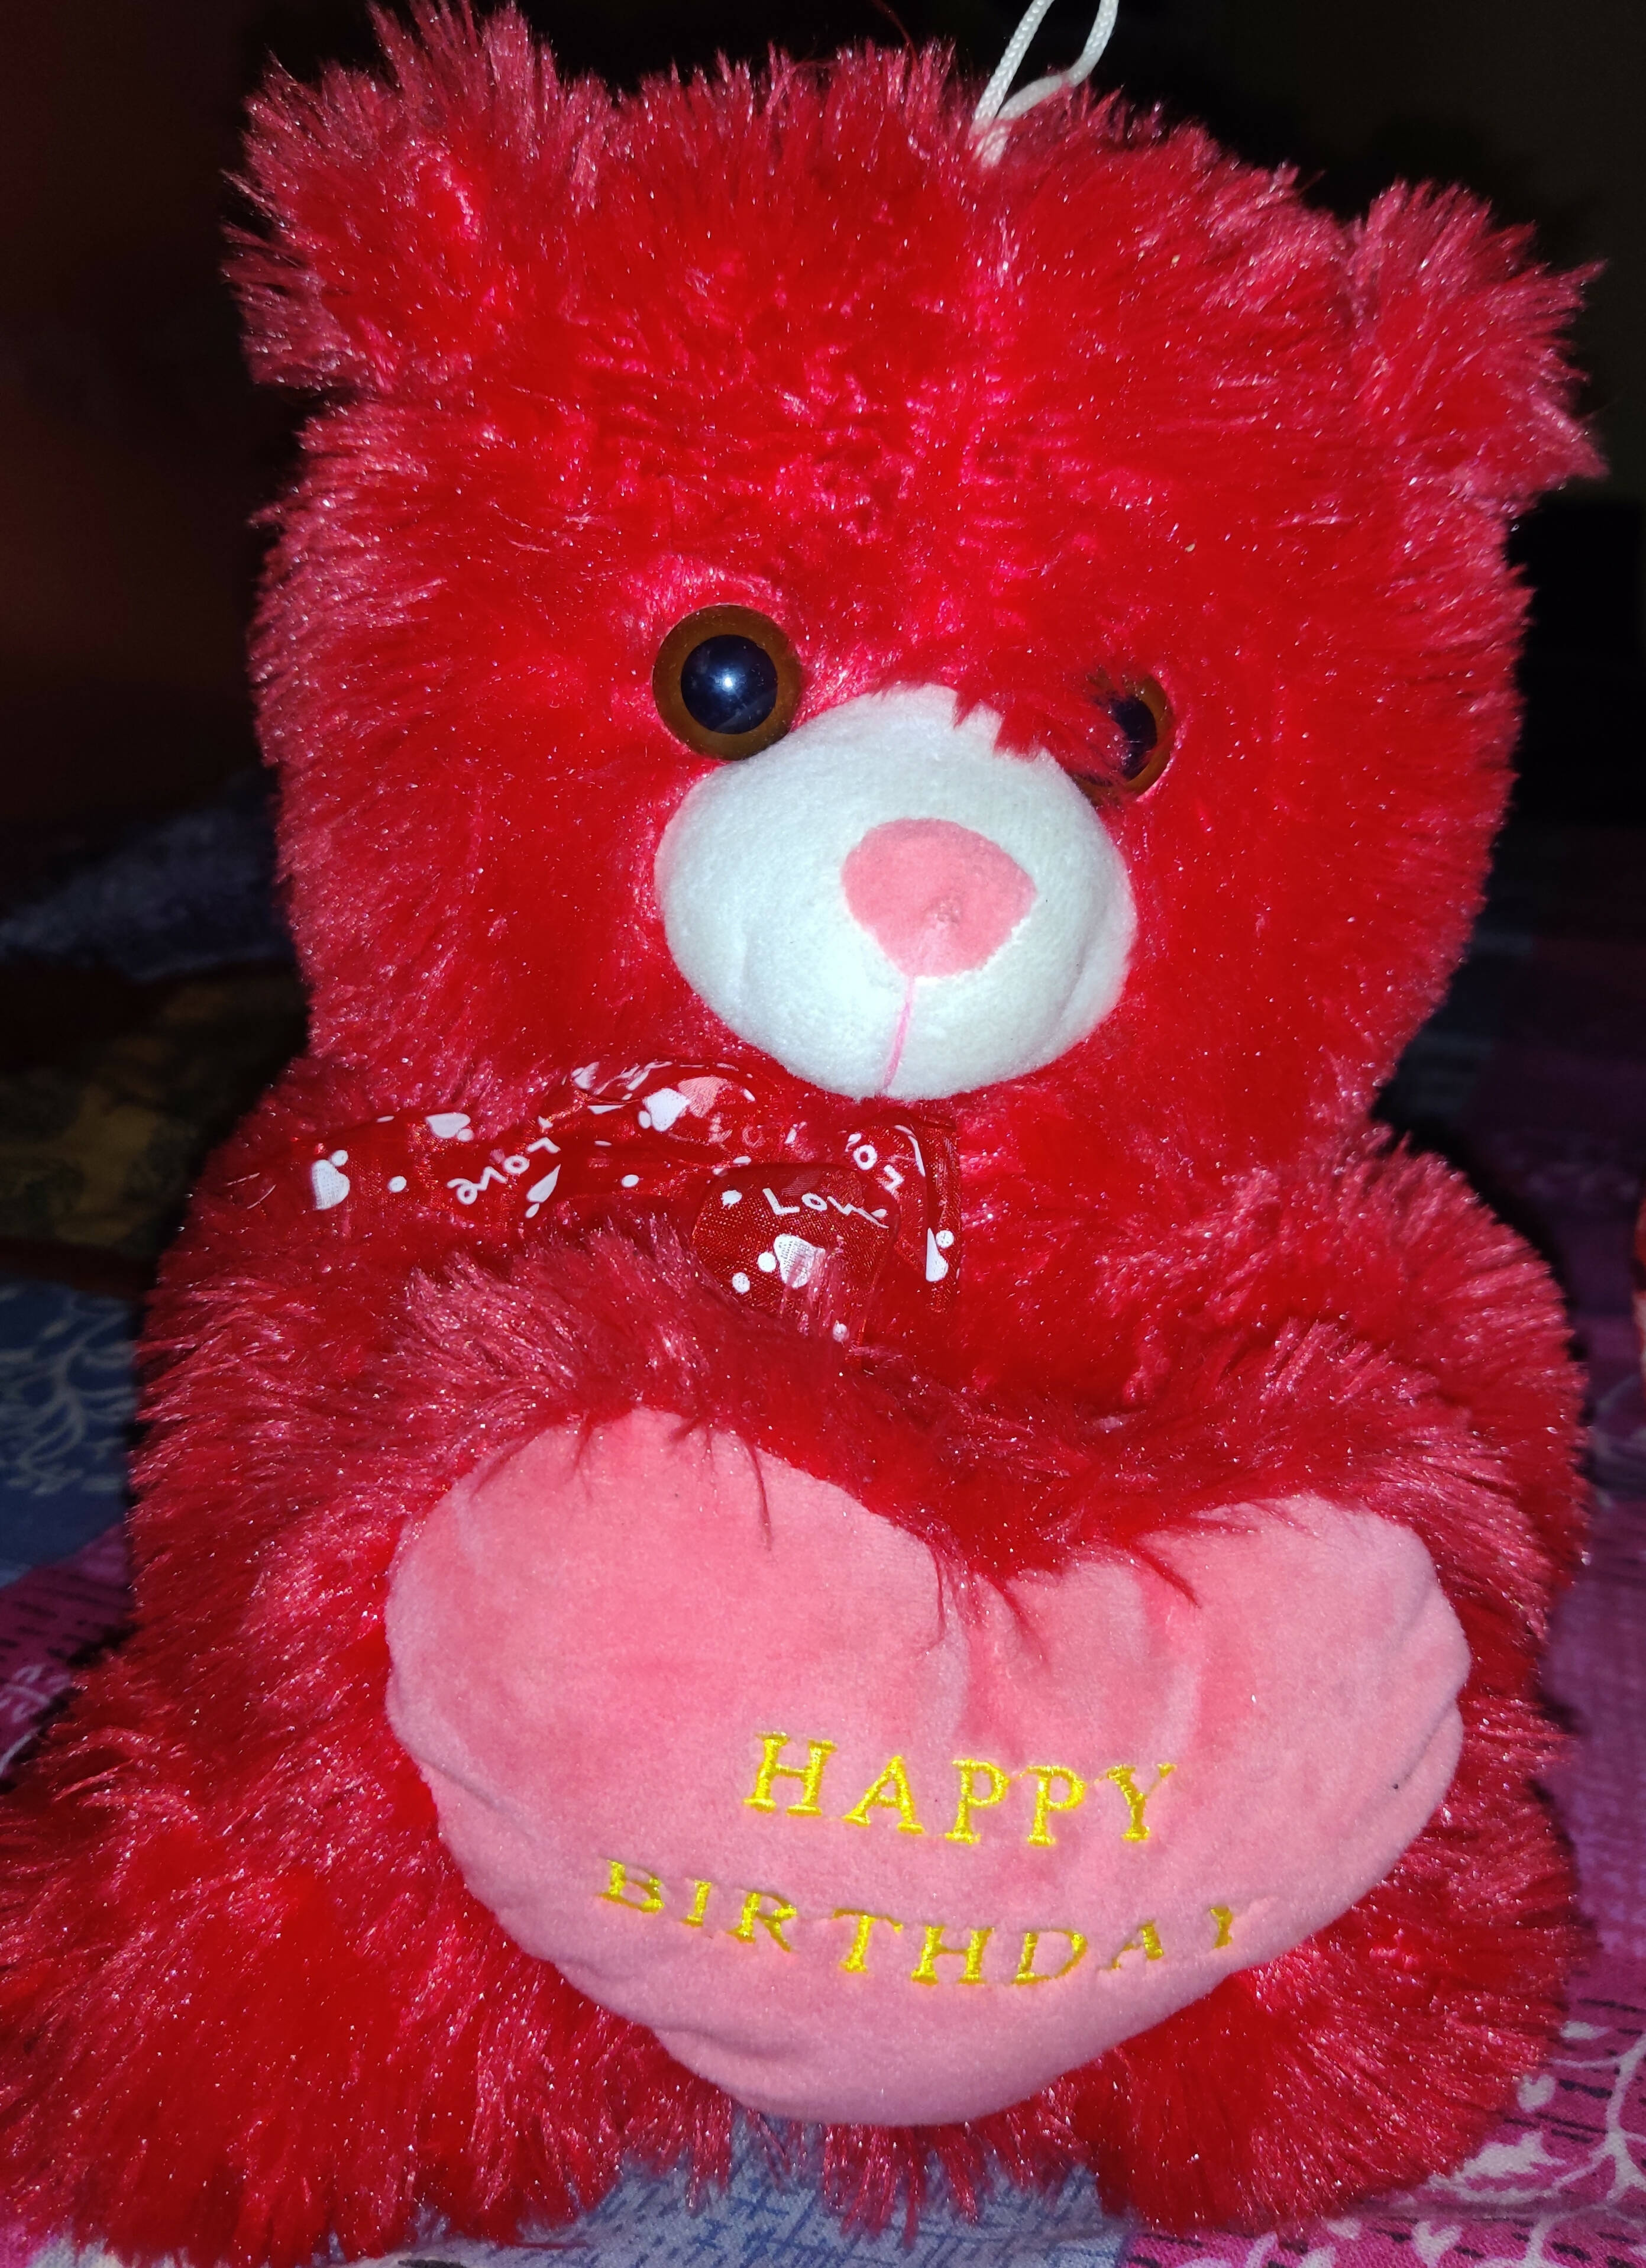 Teddy Bear Saying 'Happy Birthday' - New